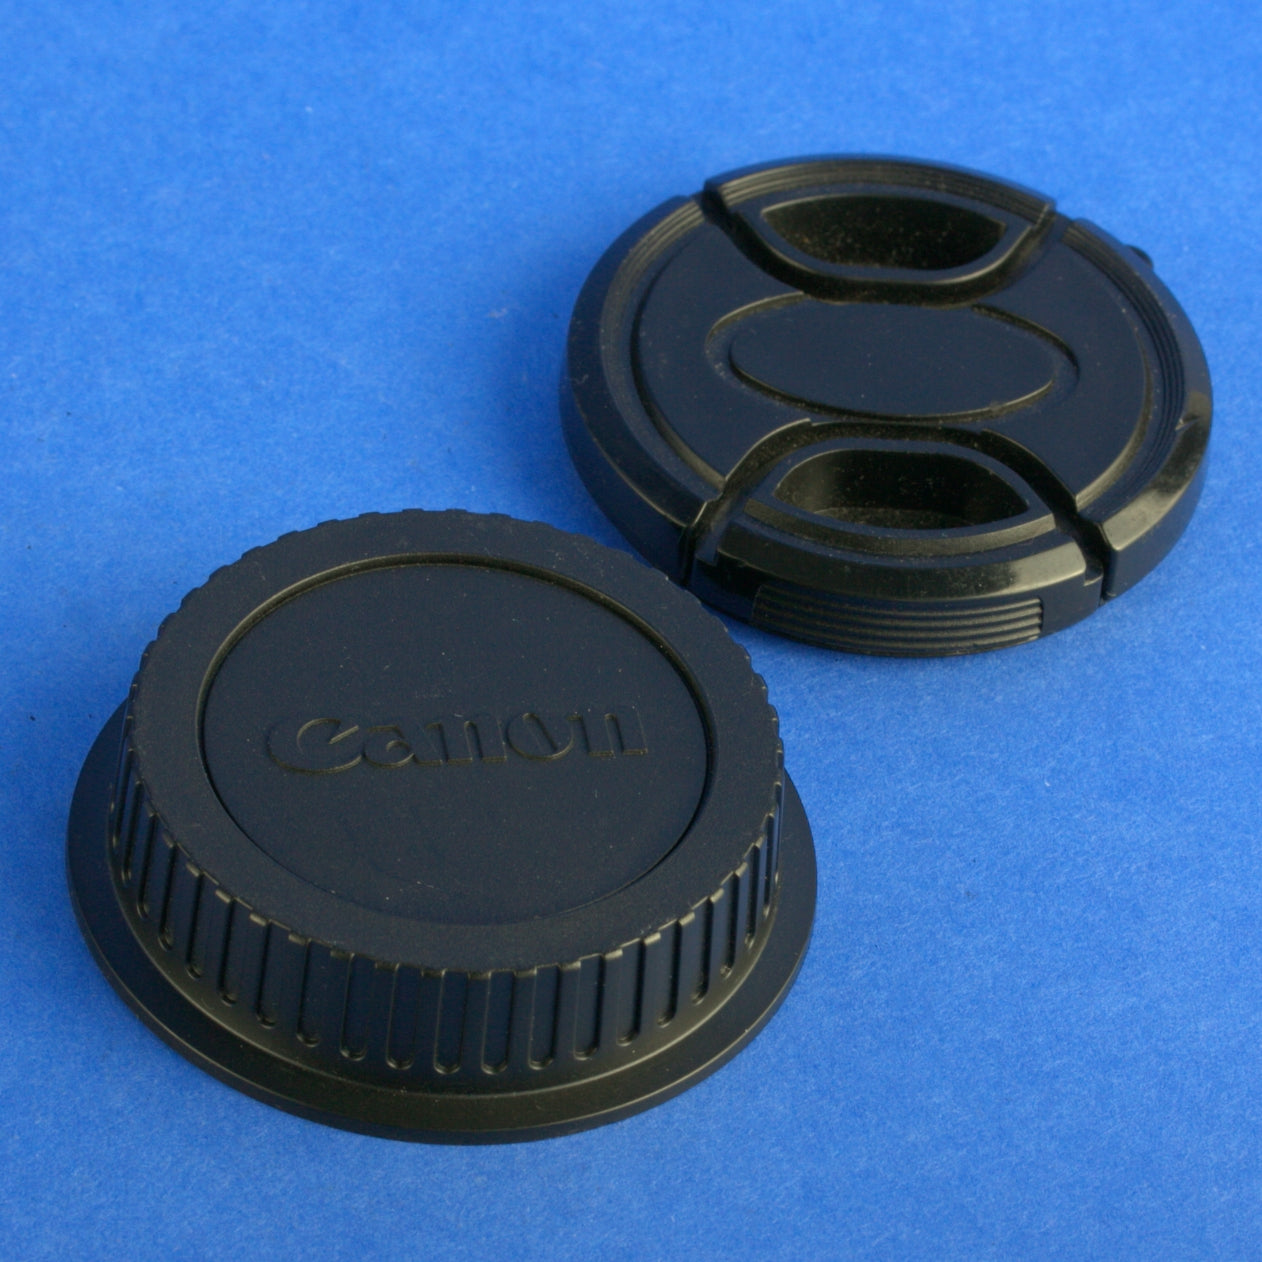 Canon EF 100mm 2.8 USM Macro Lens